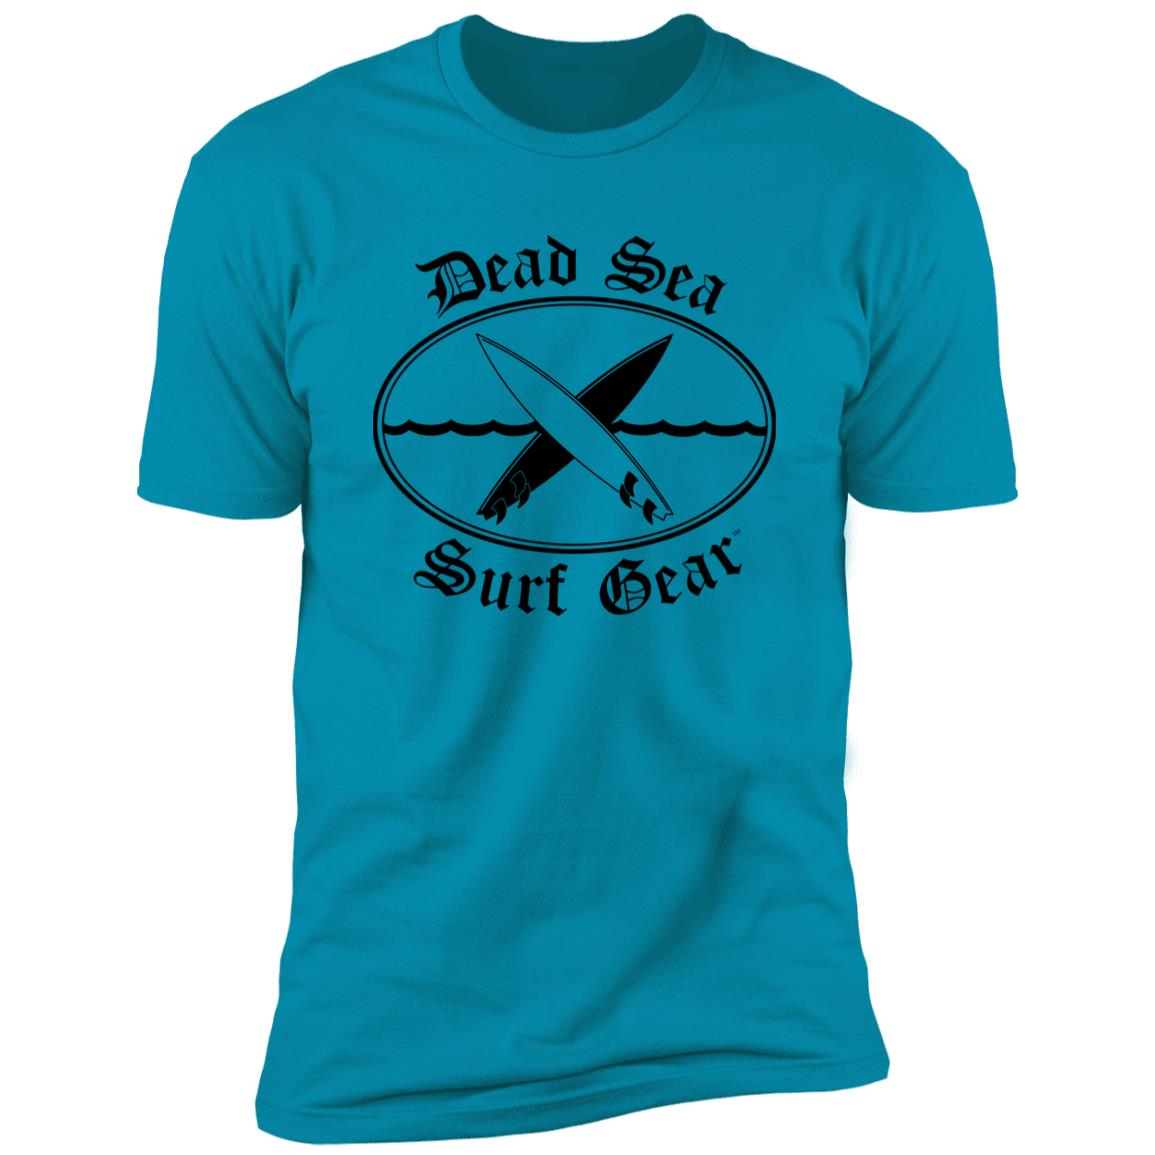 Dead Sea Surf Gear Men's Premium Short Sleeve T-Shirt